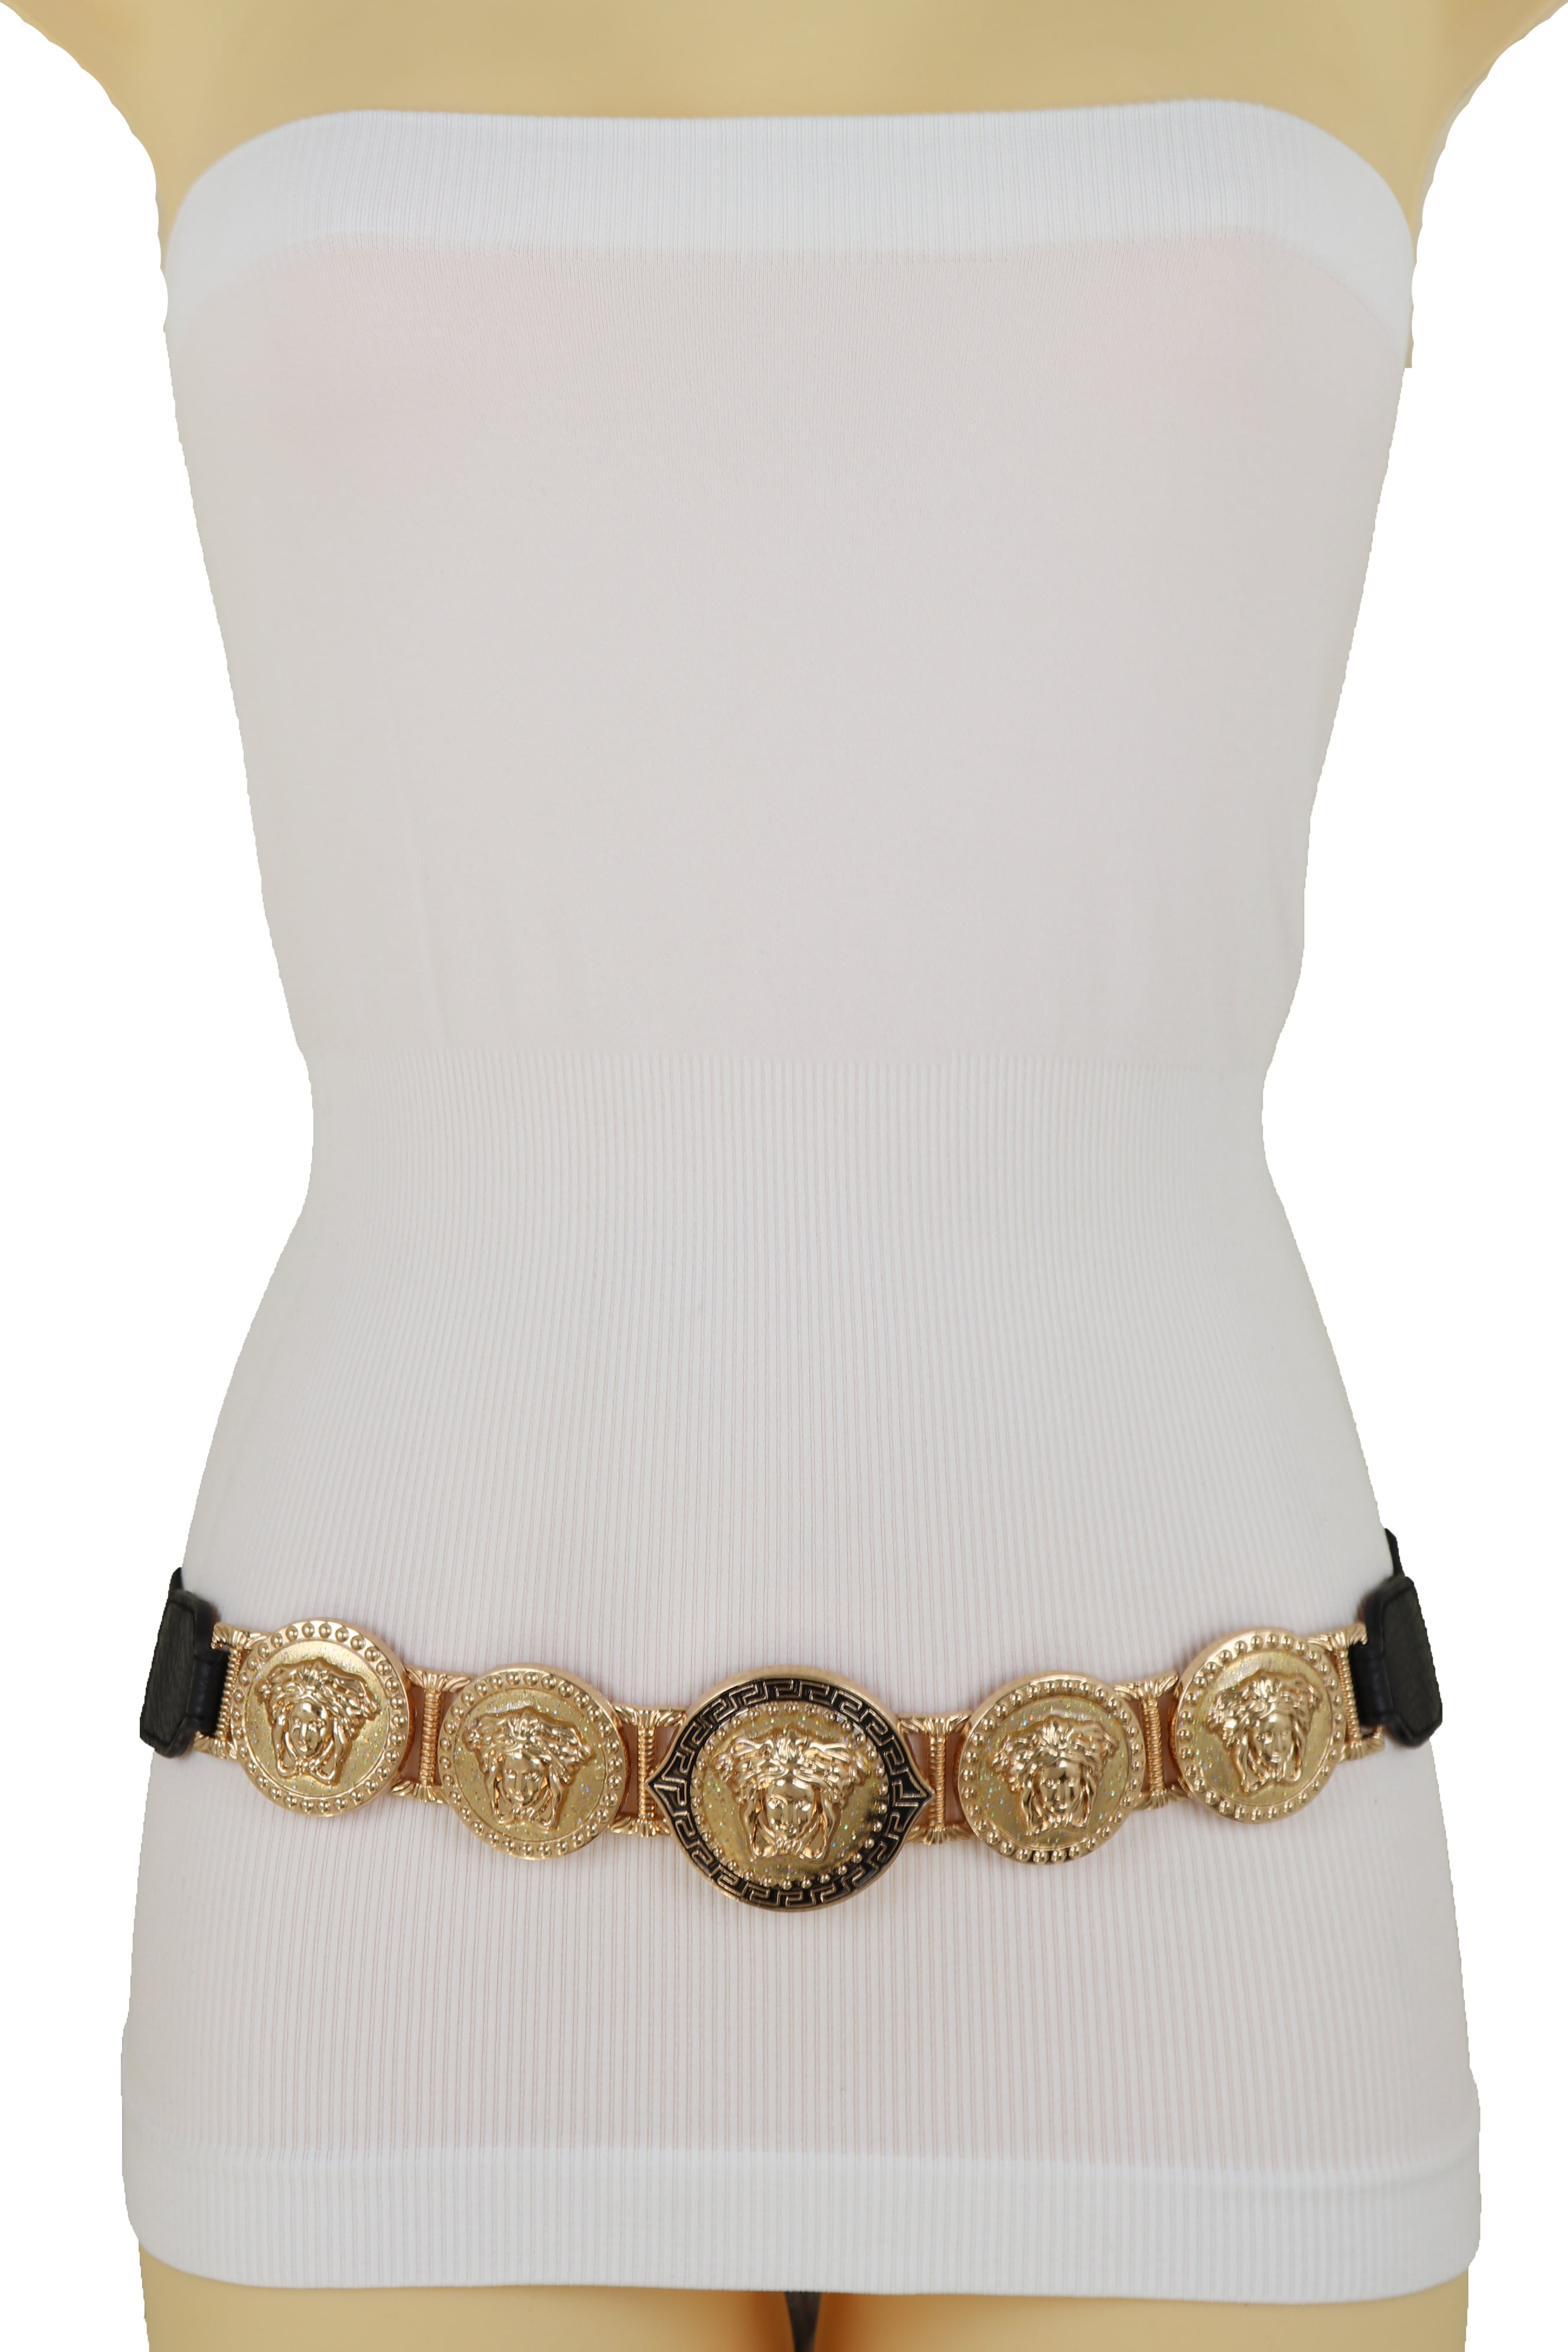 Women Gold Metal Chain Fashion Belt Infinity Charm Buckle Hip Waist Plus M L XL 